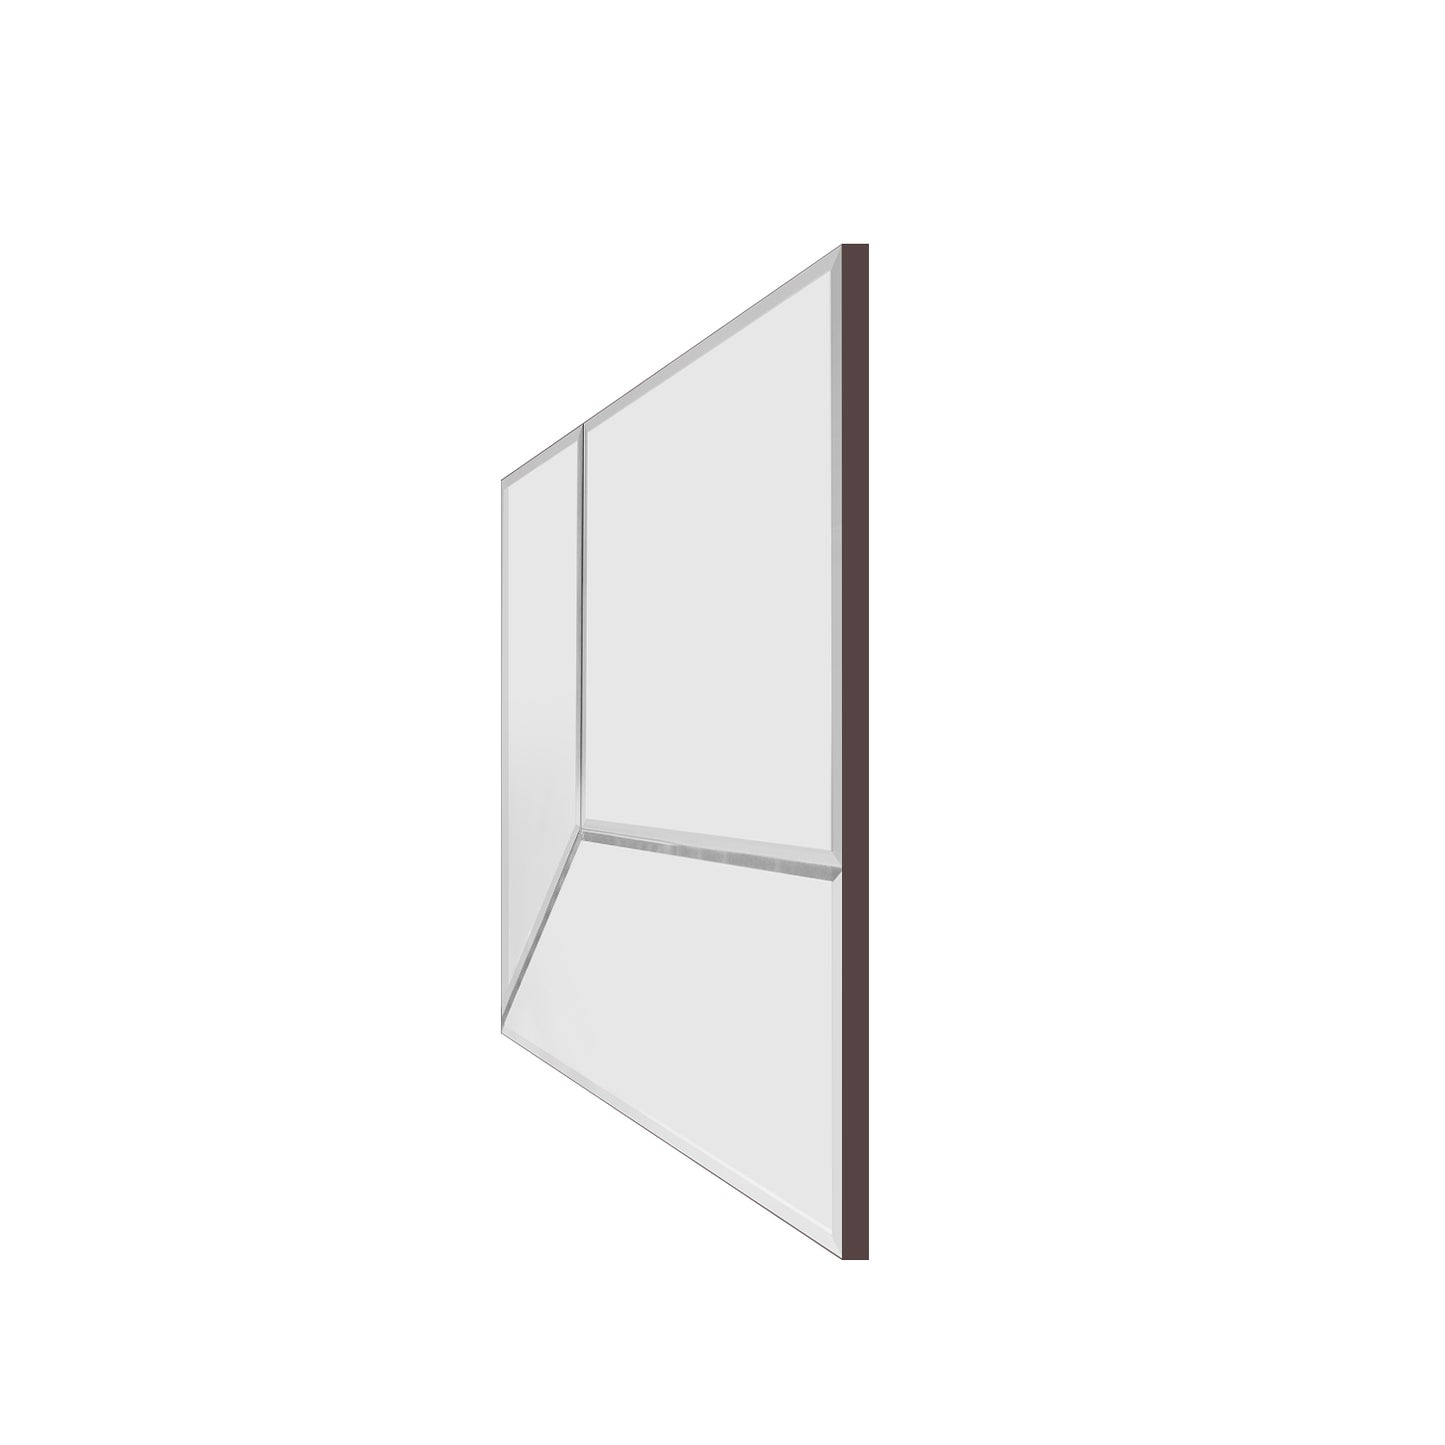 Reversible Square XL- Mirror - 60 x 60 cm  -Reversible - Beveled Mirror - Unique Wall Decor